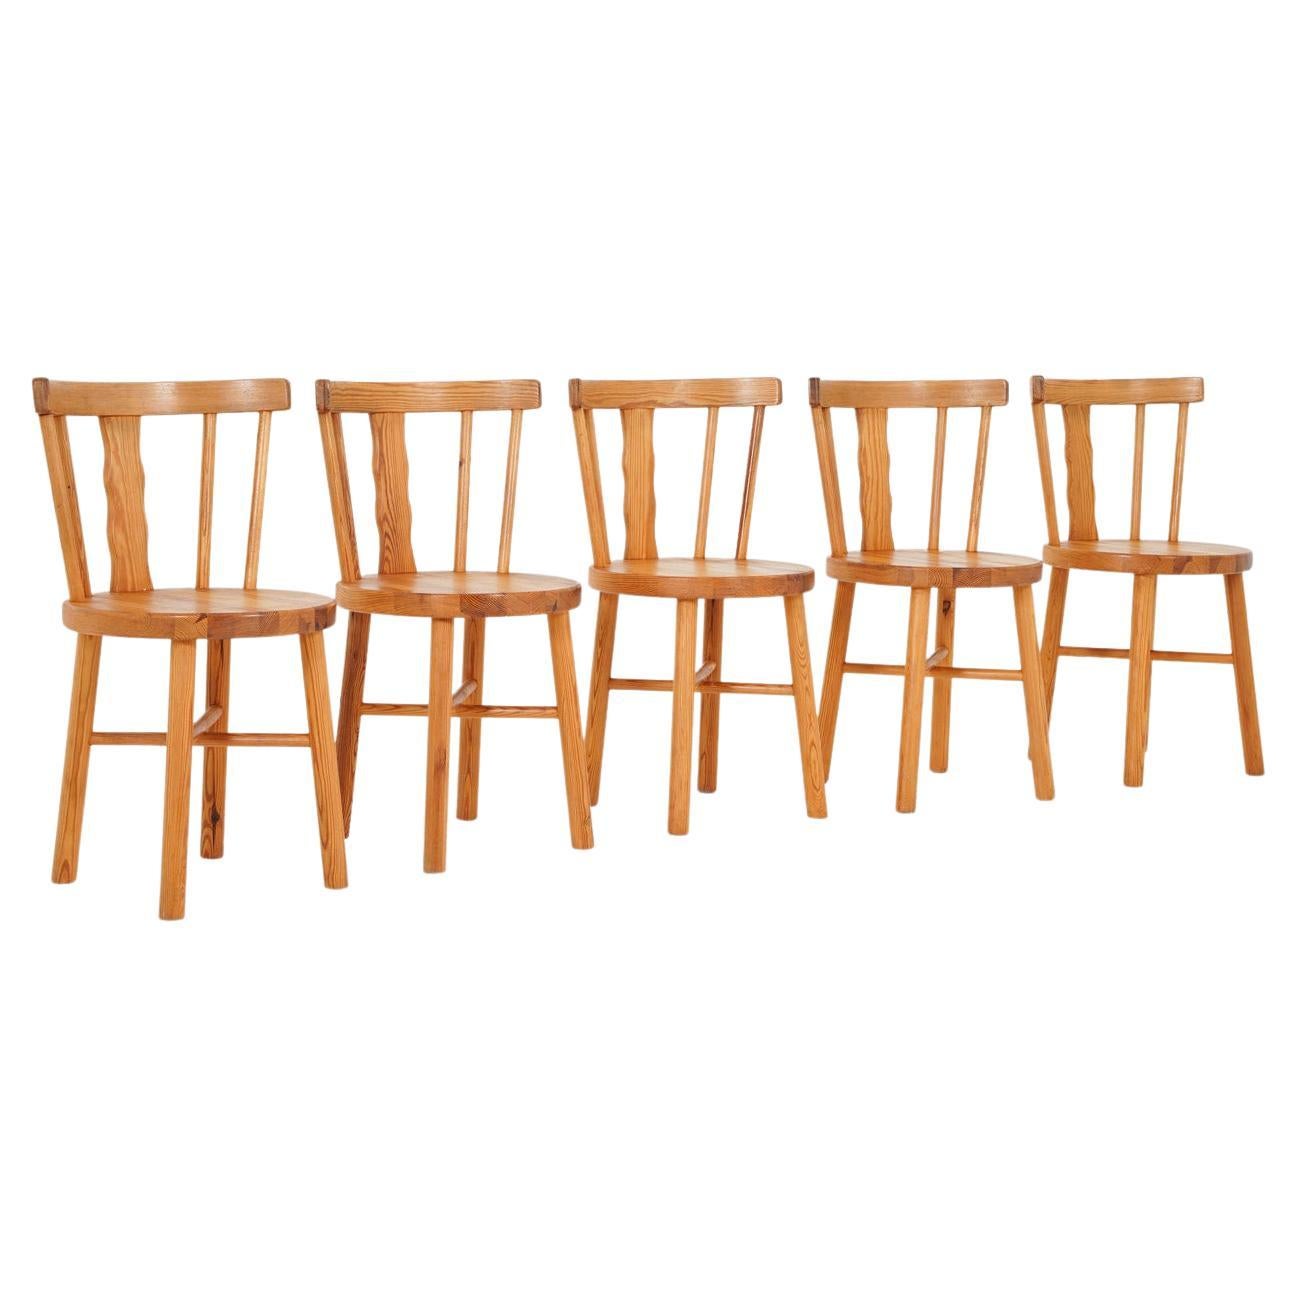 Set of Five Swedish Chairs in Pine by Steneby Hemslöjd